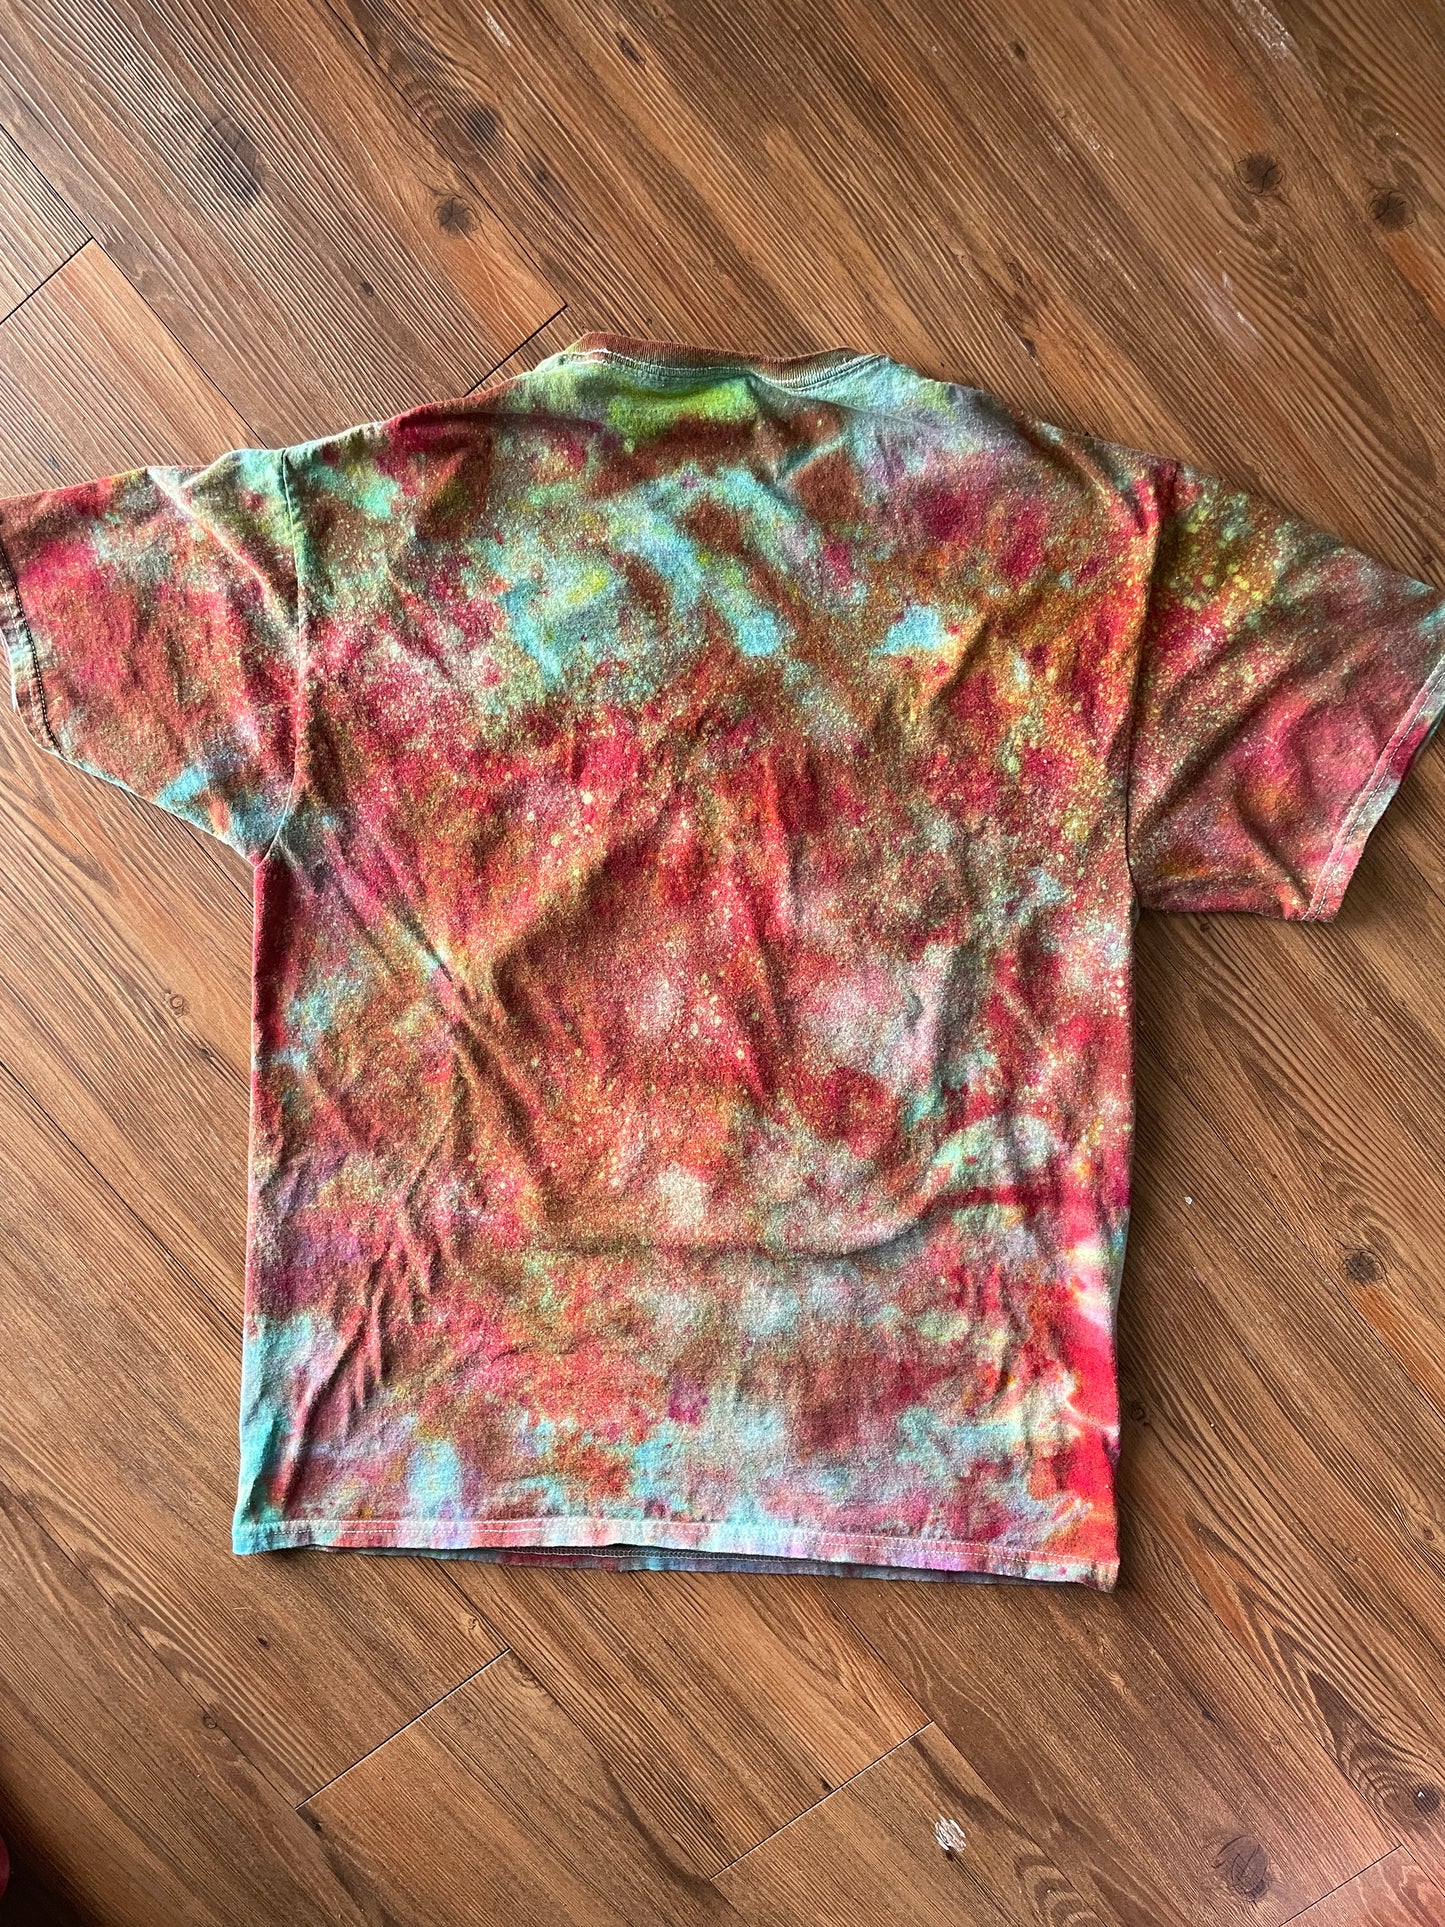 LARGE Men’s Bob Ross Mistakes Galaxy Handmade Tie Dye T-Shirt | One-Of-a-Kind Rainbow Snow Dyed Short Sleeve